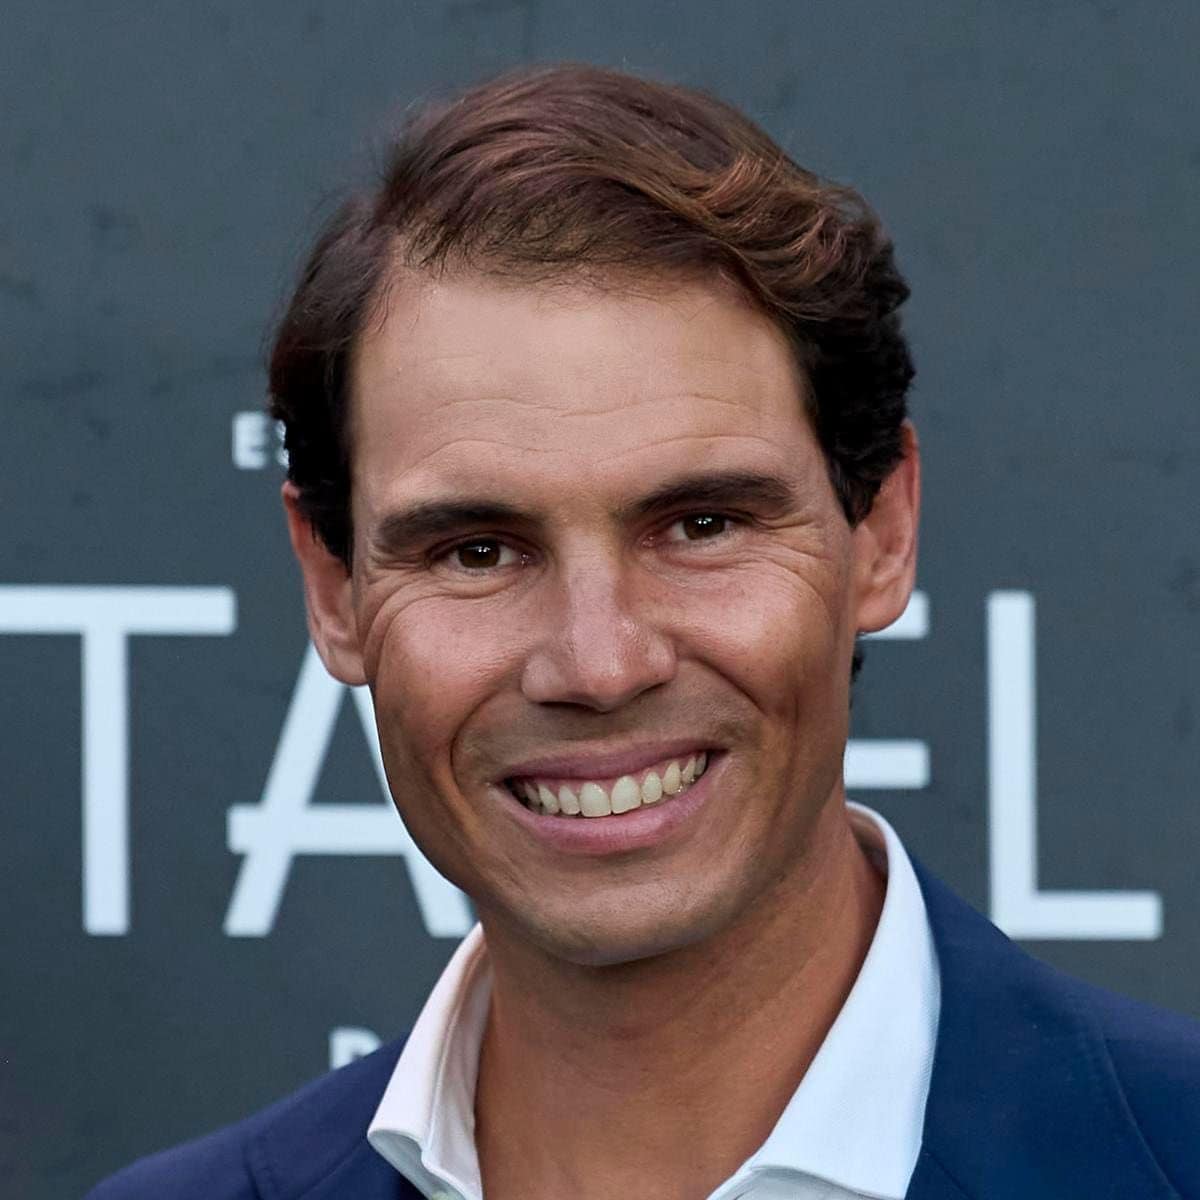 El tenista español Rafael Nadal